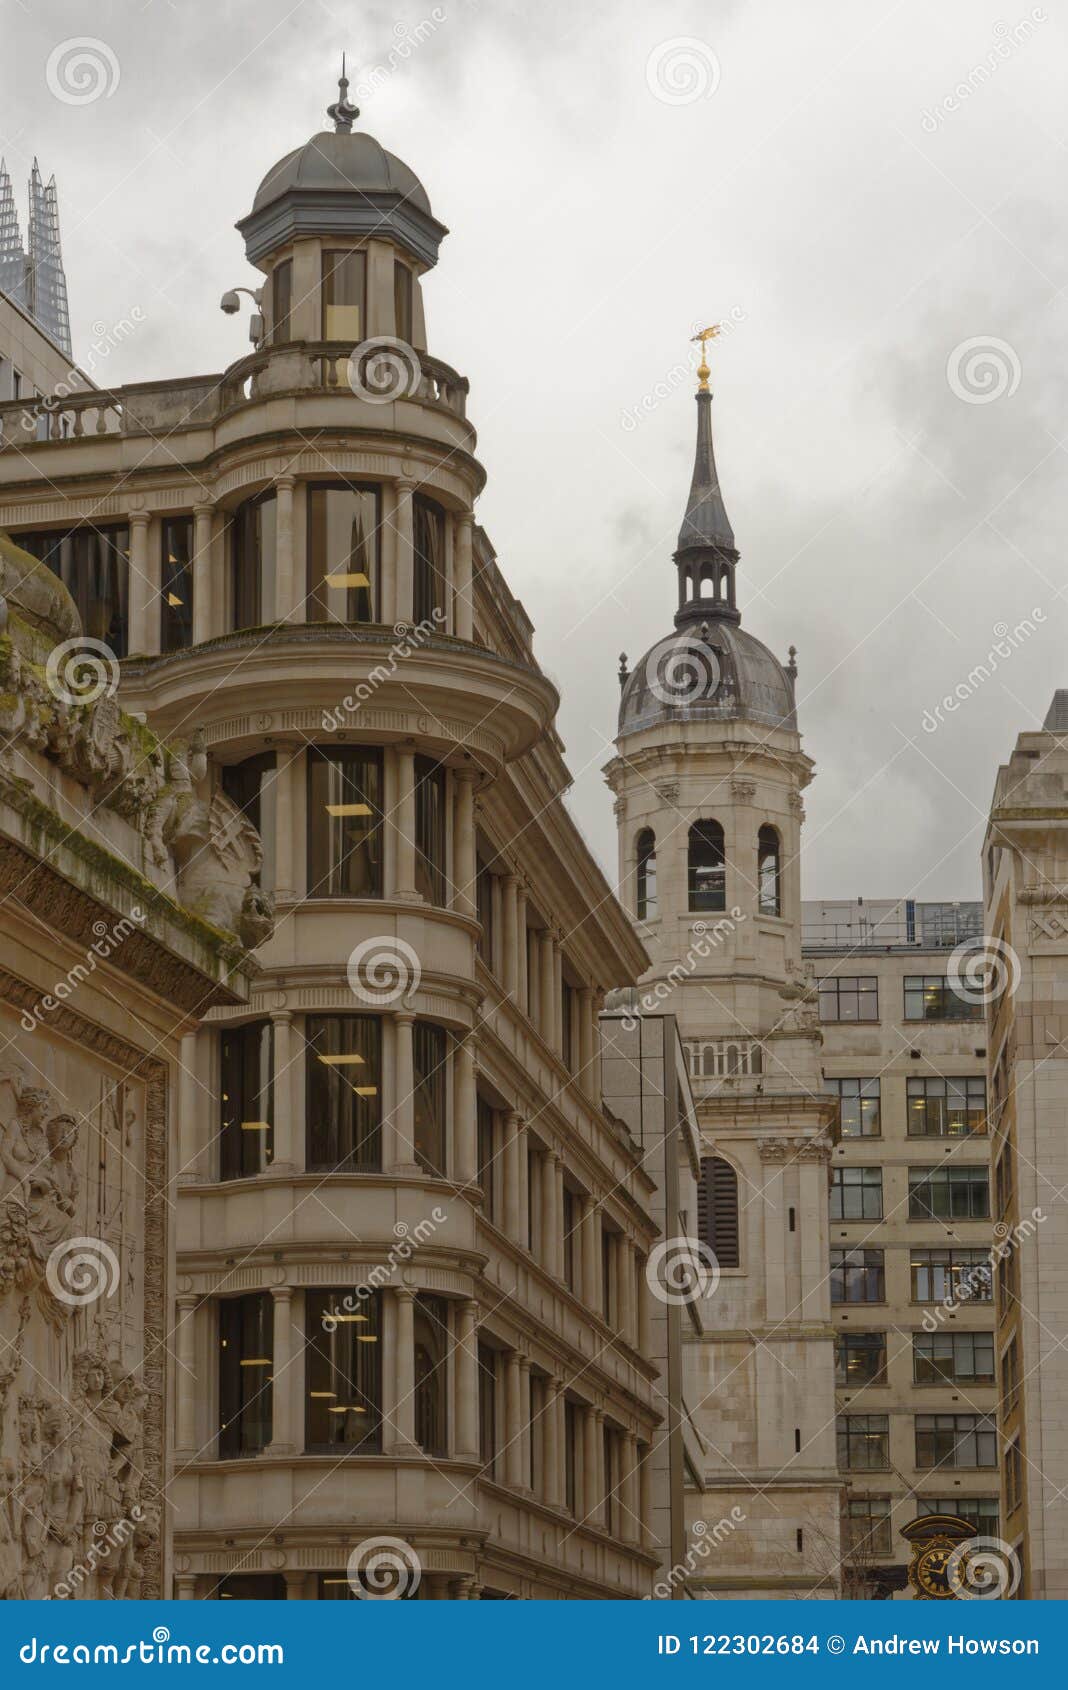 london, england: monument city buildings